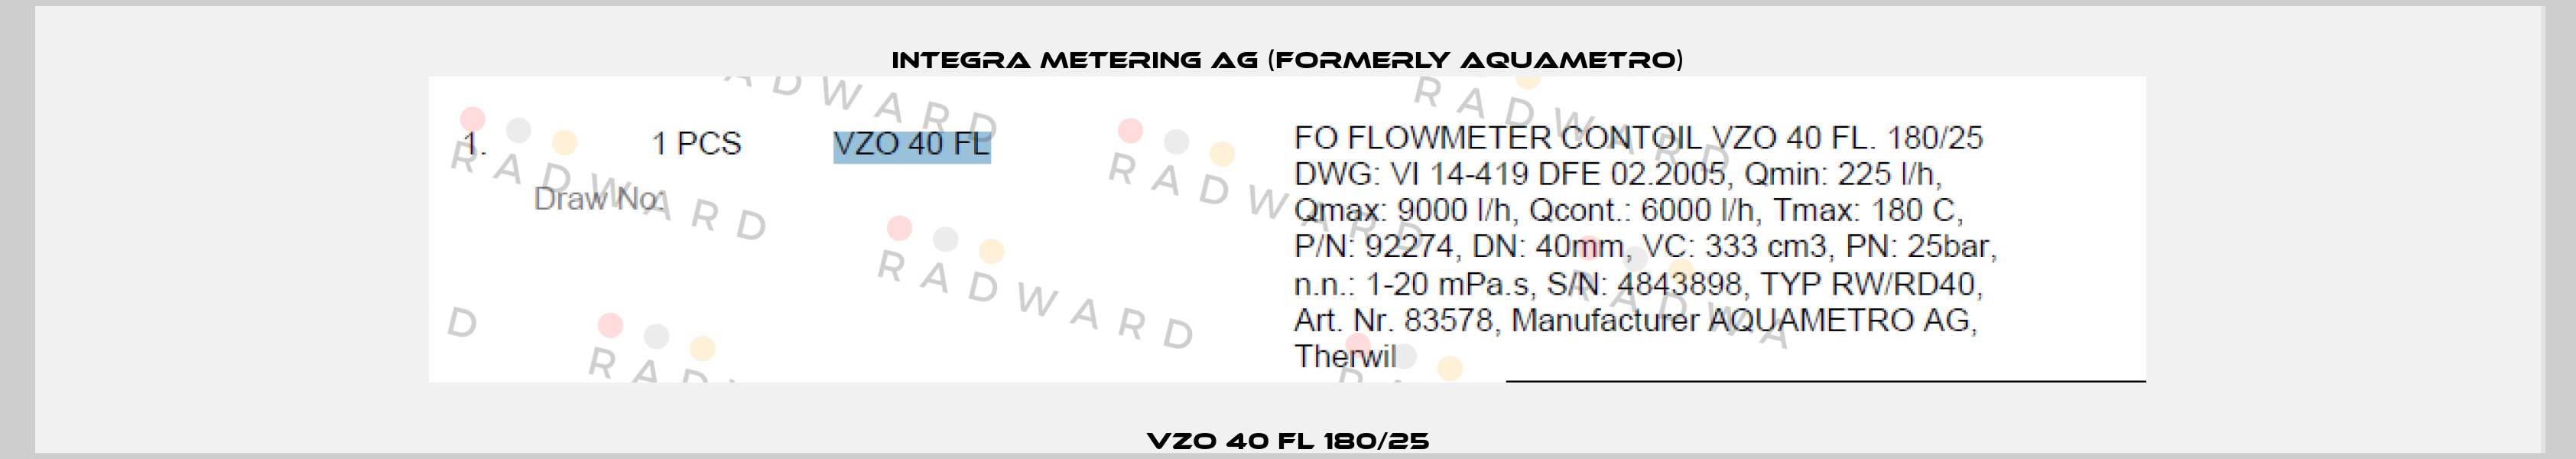 VZO 40 FL 180/25 Integra Metering AG (formerly Aquametro)